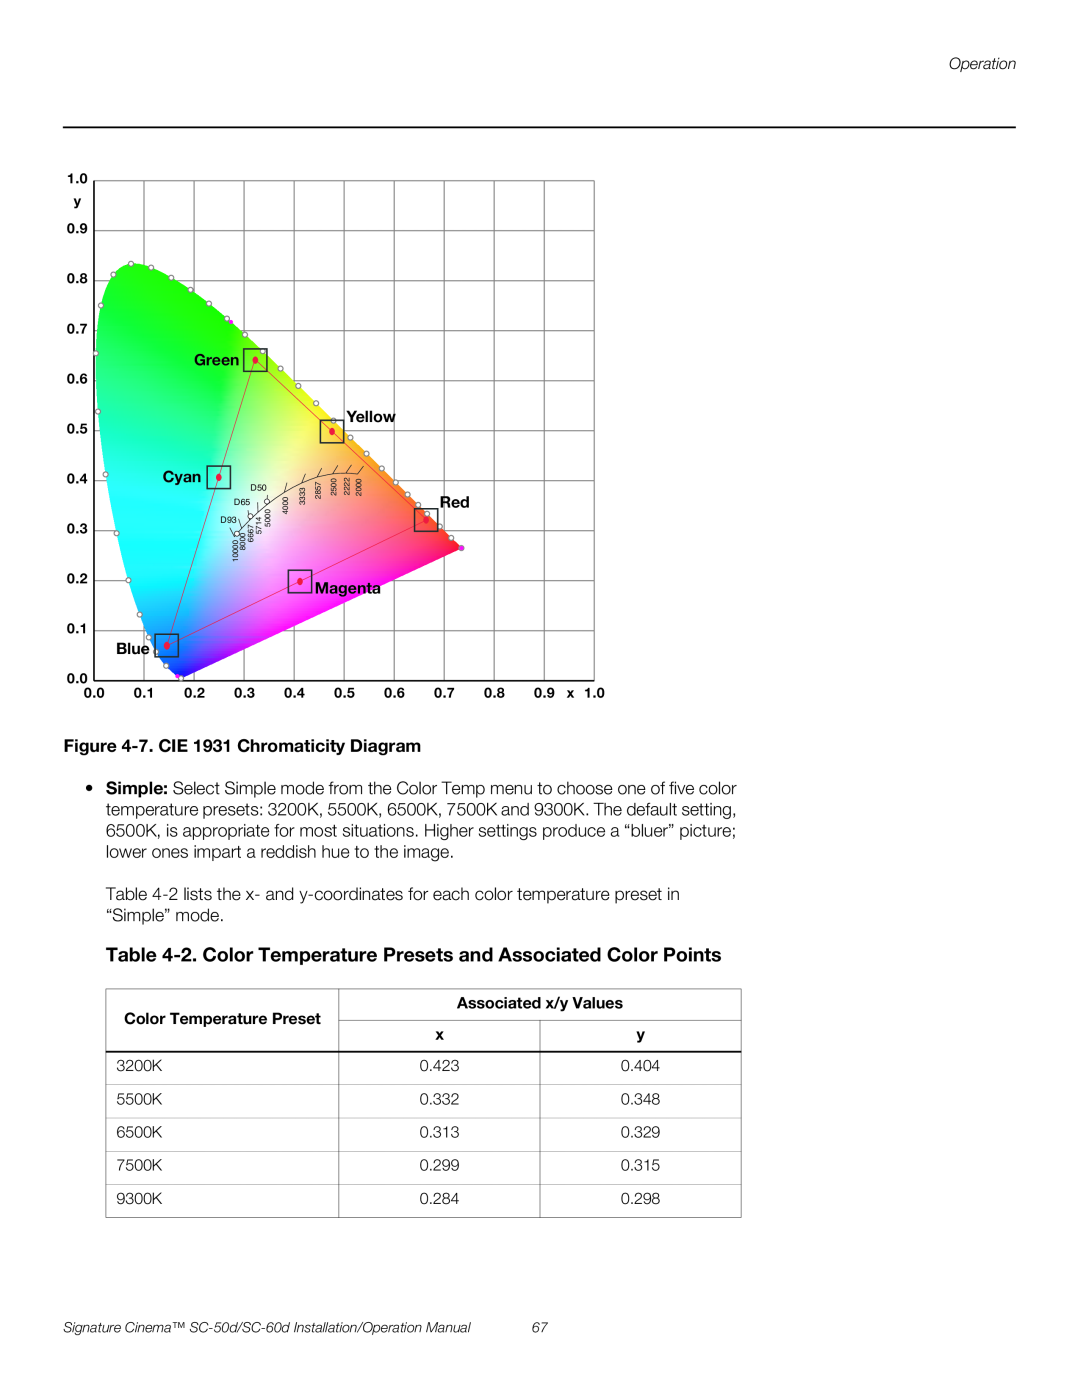 Runco SC-50D, SC-60D 7.CIE 1931 Chromaticity Diagram, Green, Yellow, Cyan, Magenta, Blue, Color Temperature Preset 